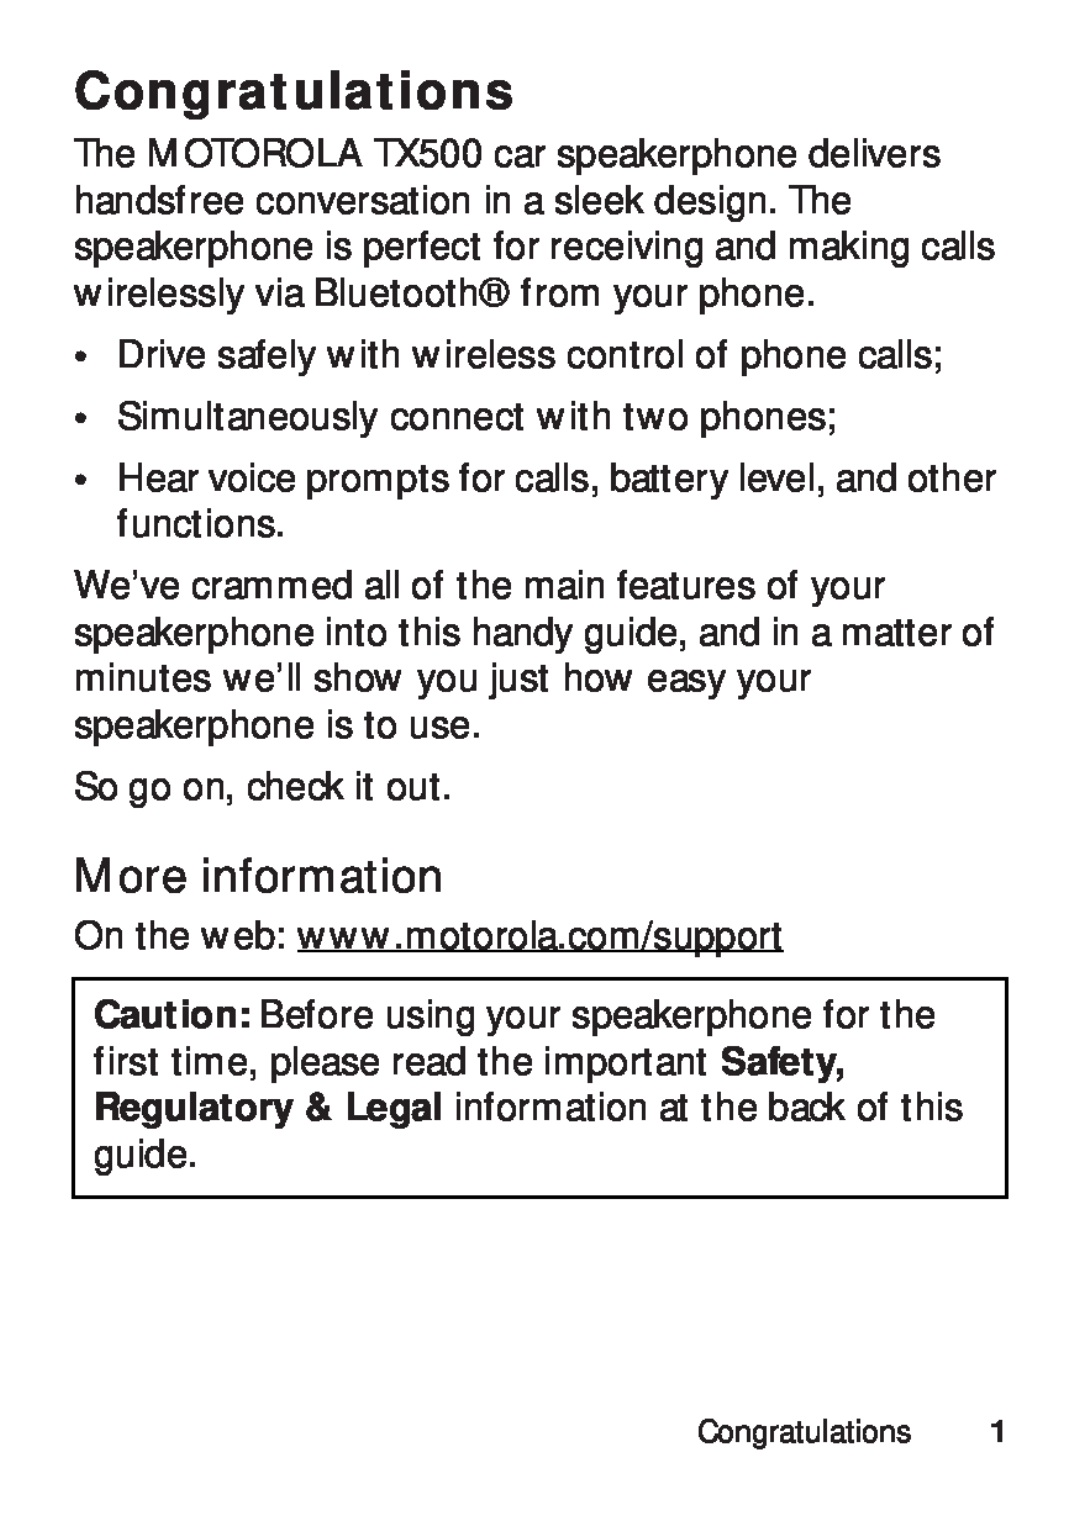 Motorola TX500 manual Congratulations, More information 